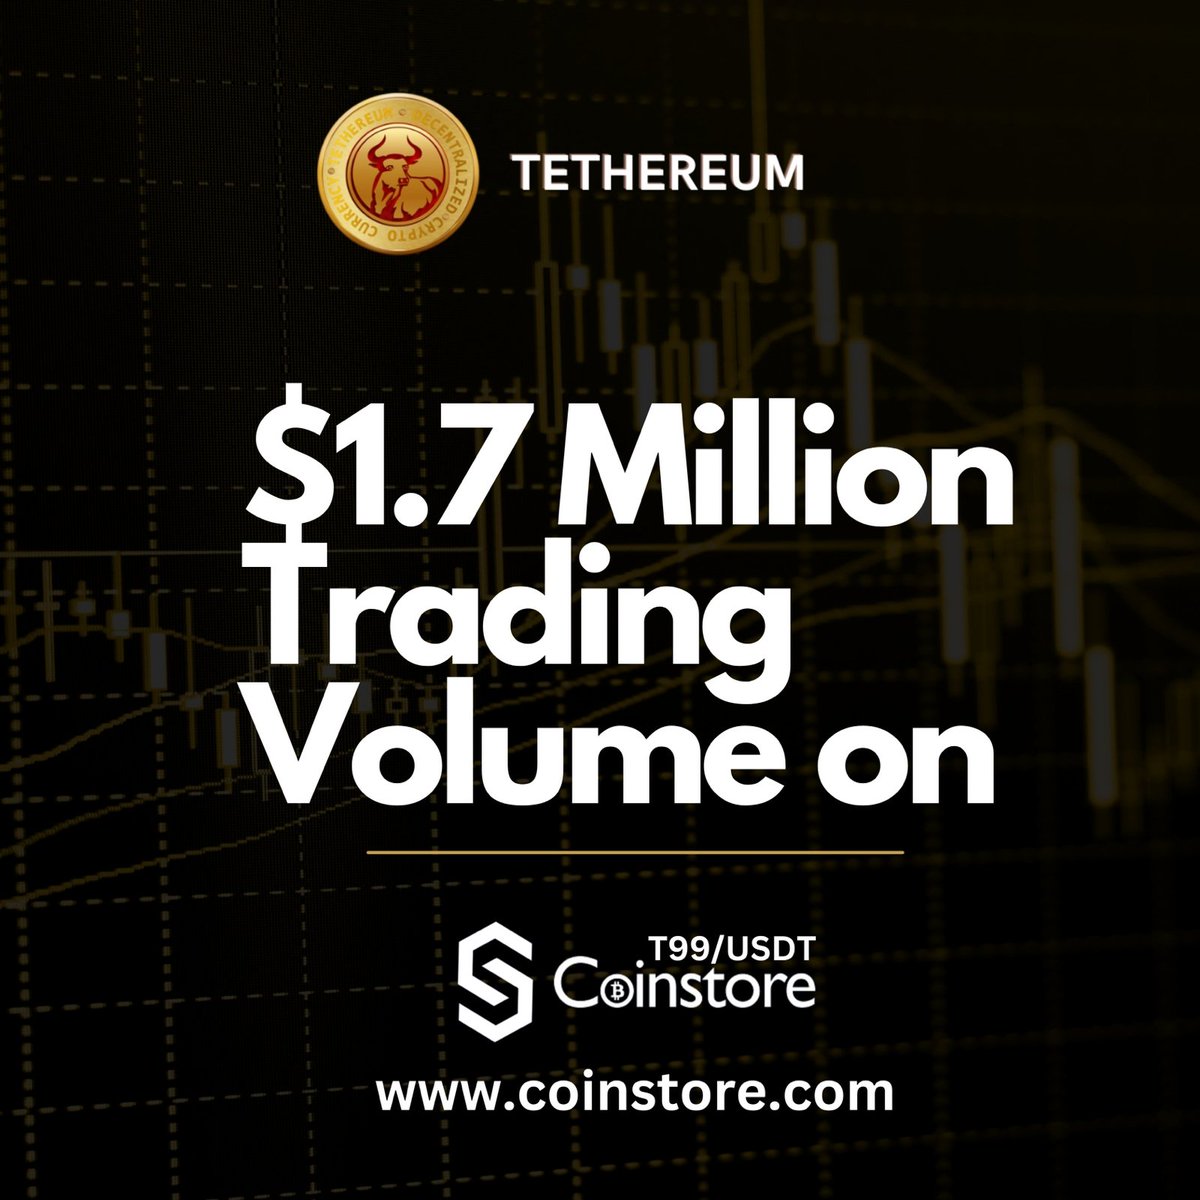 $1.7 Million Trading Volume On coinstore.com 🚀

Thank you to the @TethereumToken Community

#Tethereum
#TethereumToken #TethereumExchange #Т99
#BNB #Binance #Btc #Bitcoin #Crypto #Cryptocurrency #CryptoNews #Cryptotrading